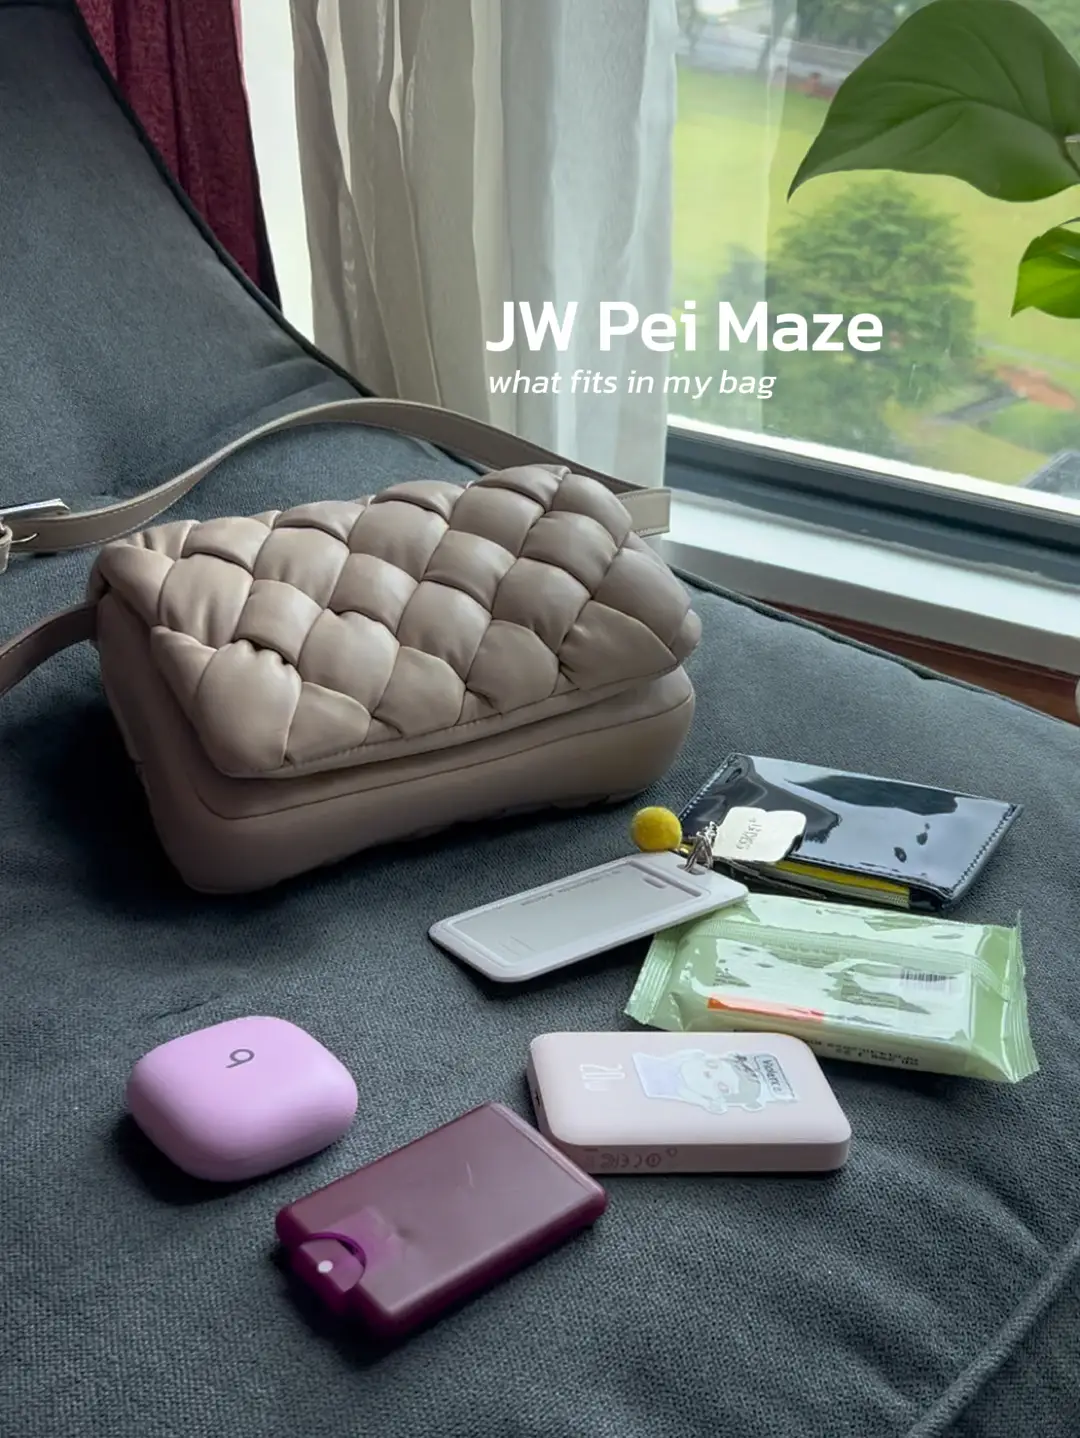 JW Pei?? : r/handbags